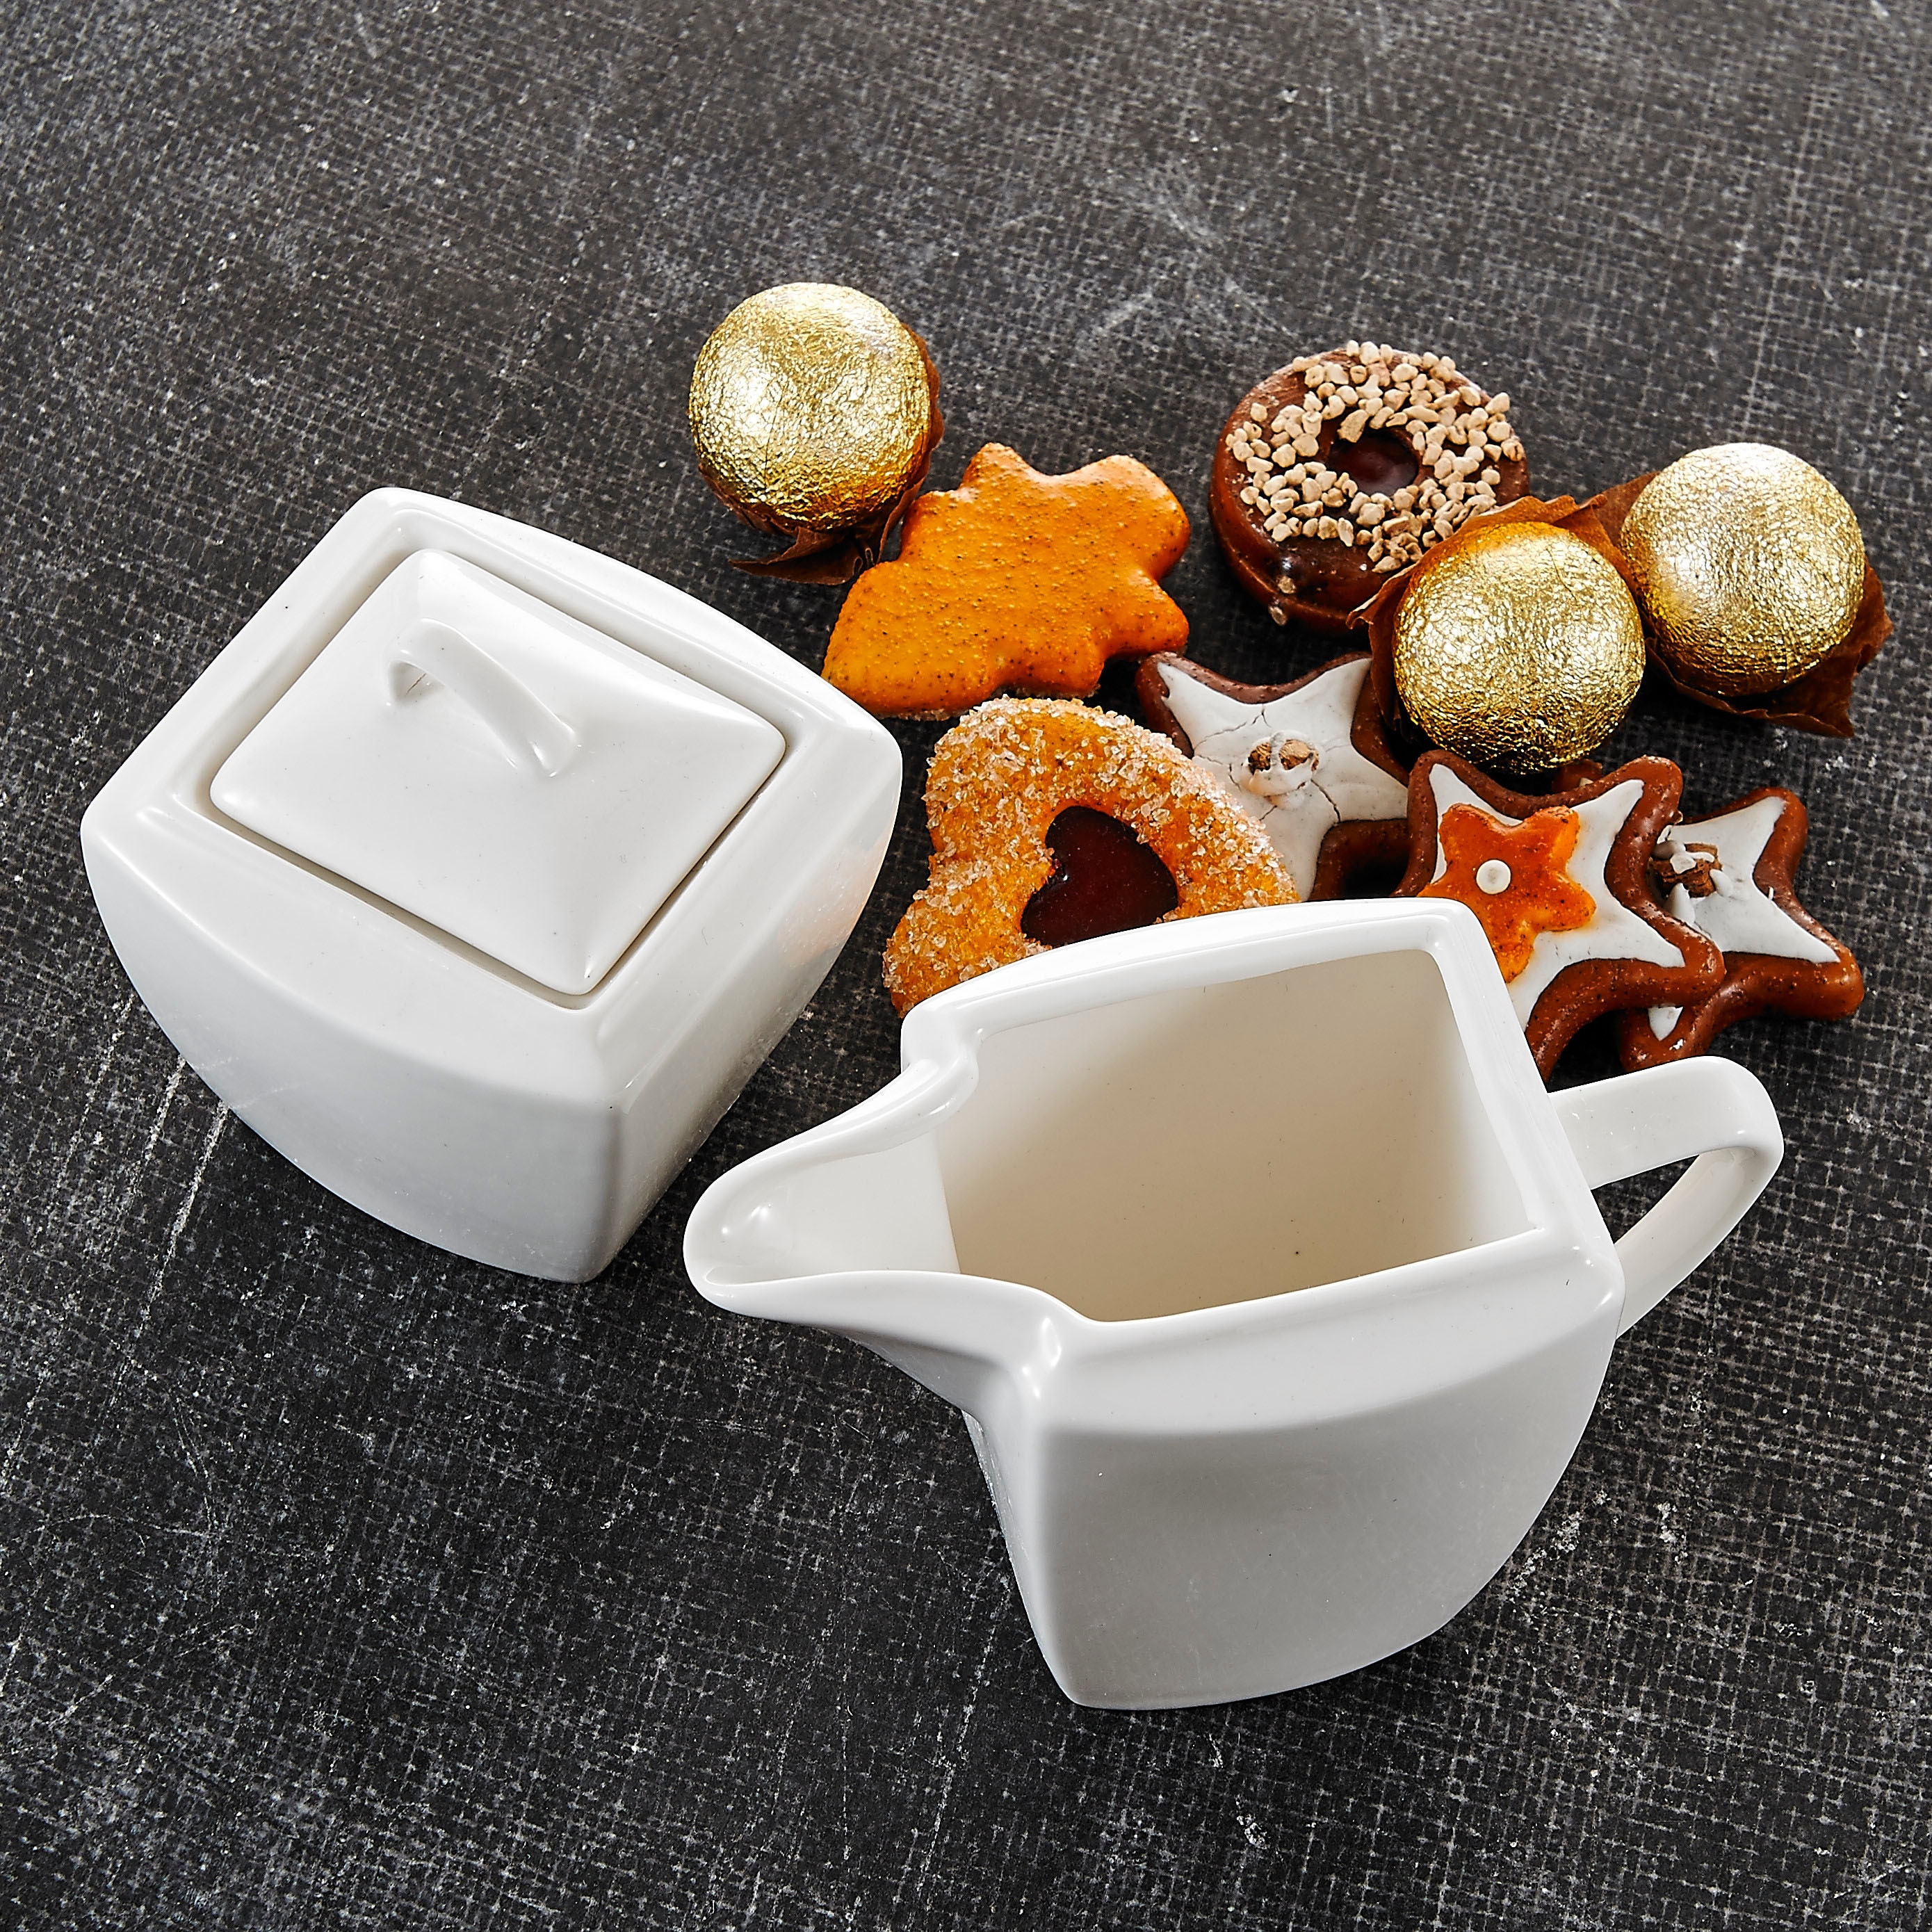 MALACASA 4.75-In White Porcelain Creamer Jug Sugar Jar (Set of 2